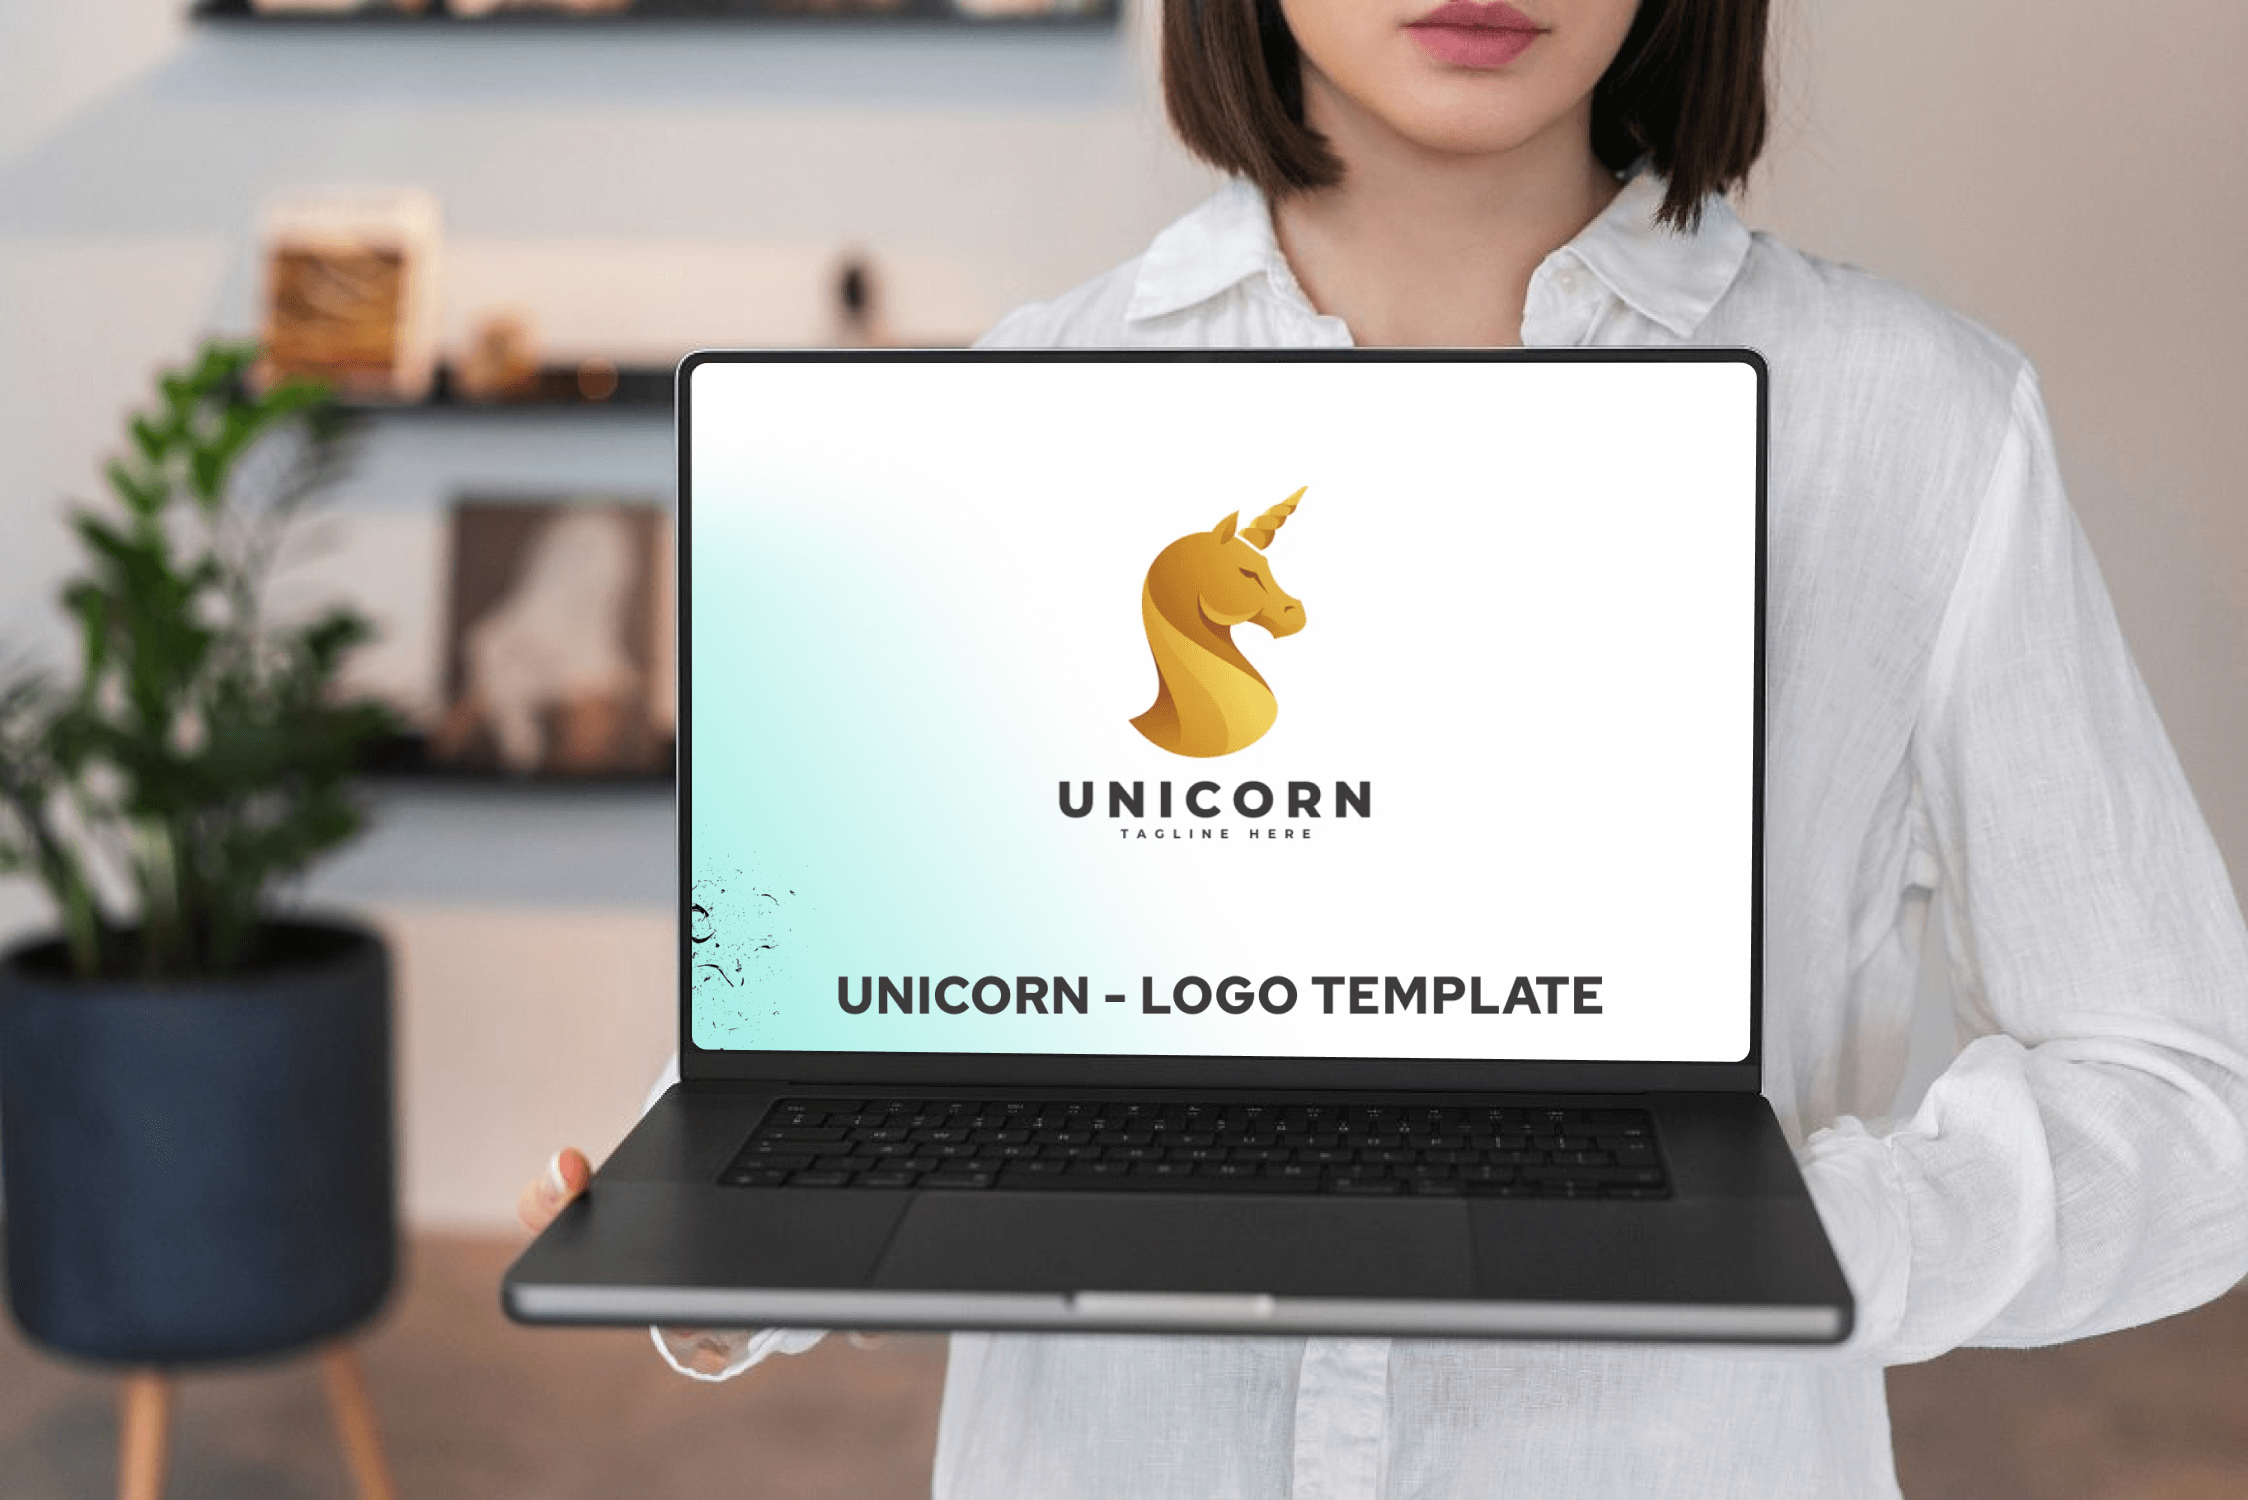 Unicorn concept design on laptop.